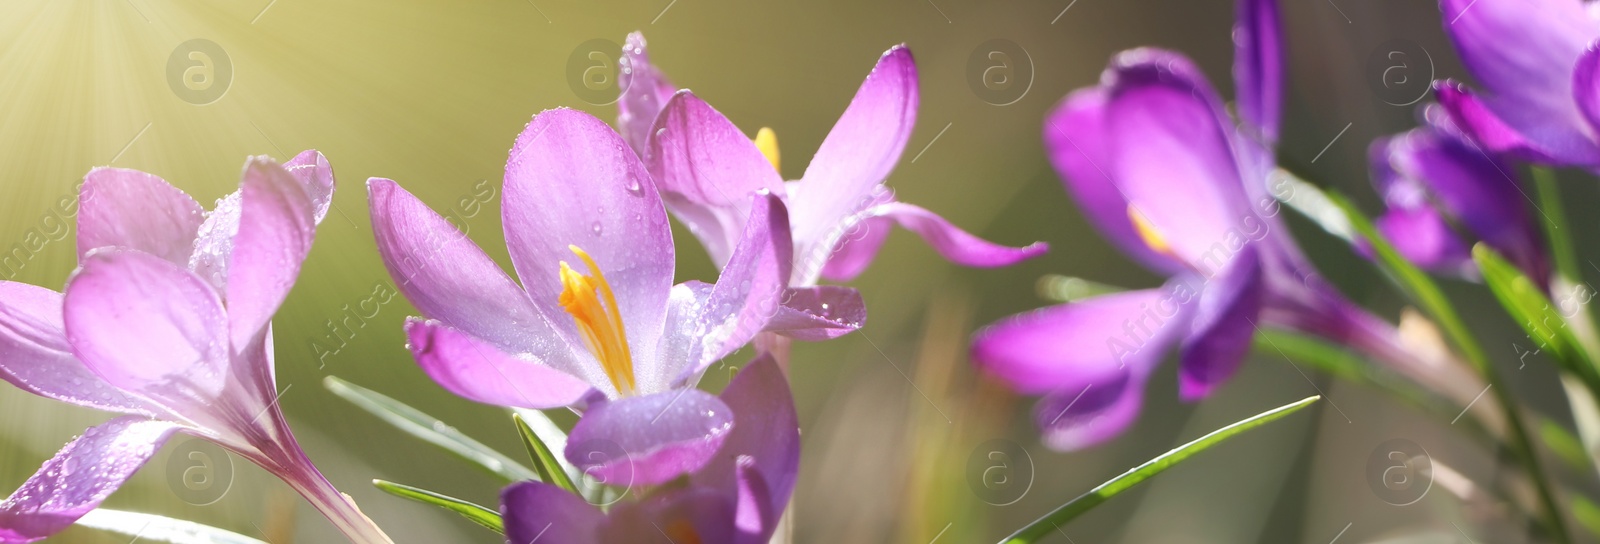 Image of Beautiful purple crocus flowers growing outdoors, closeup view. Banner design  